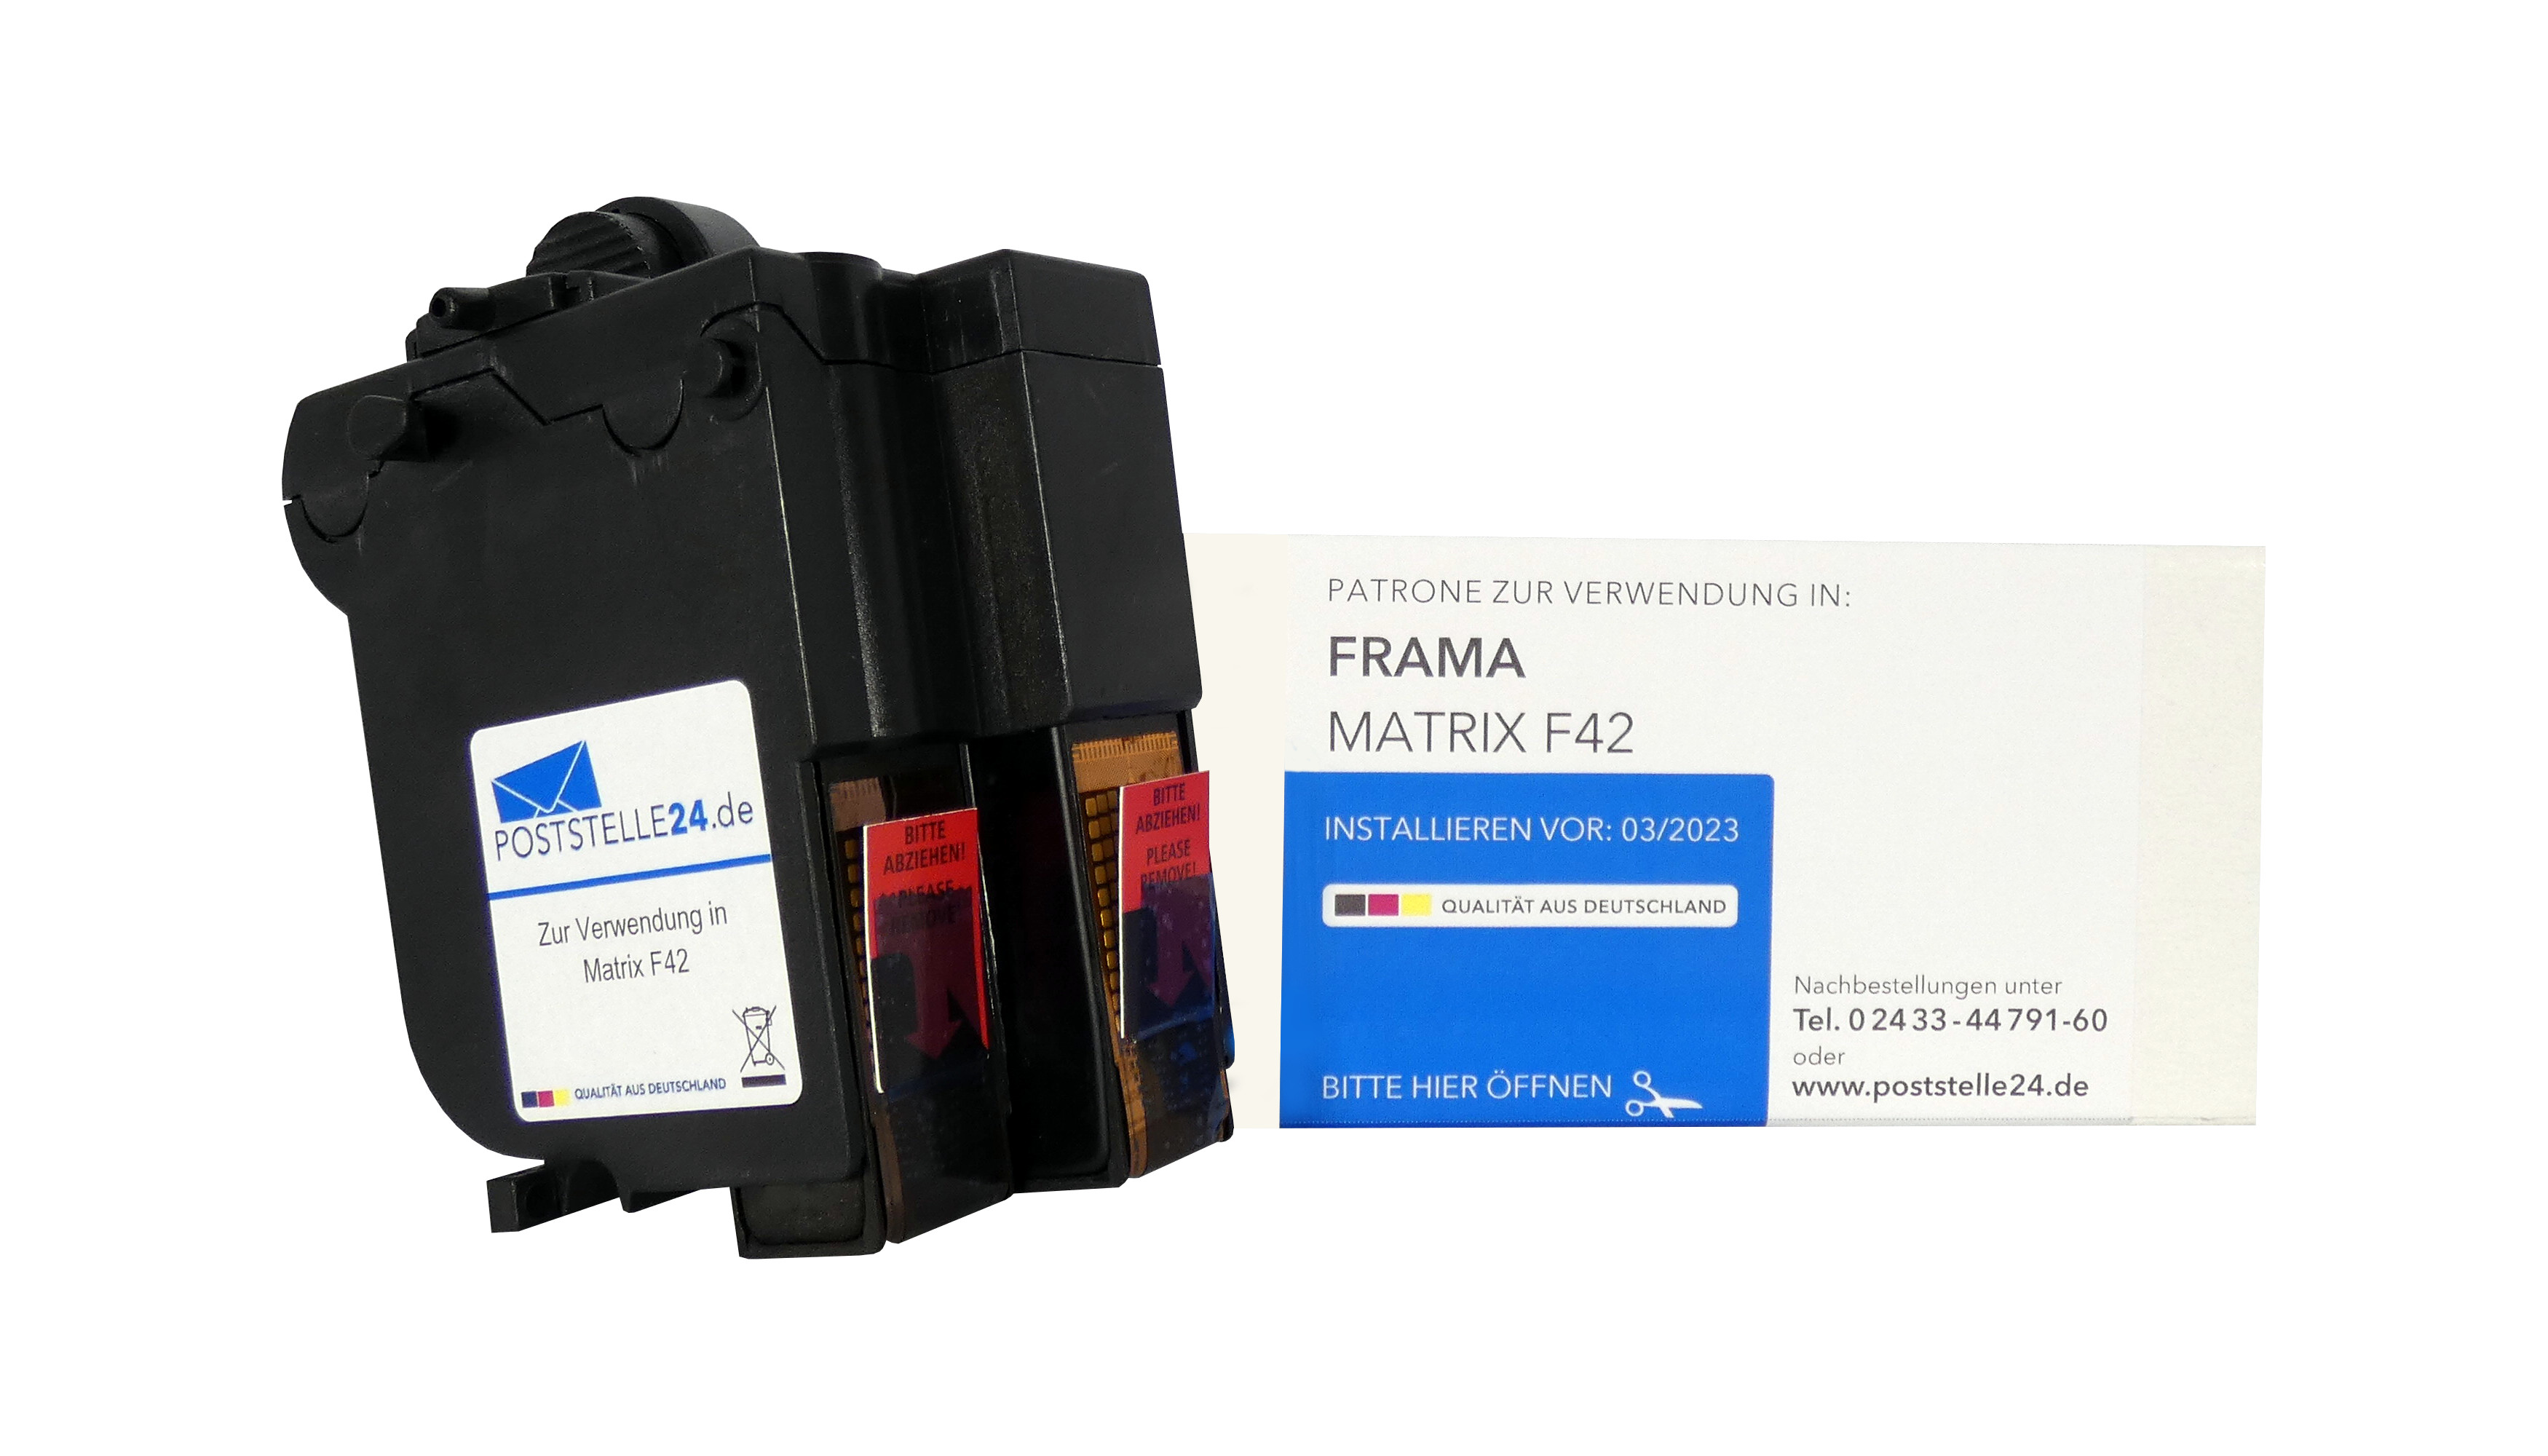 remanufactured cartridge for use in Frama Matrix F42